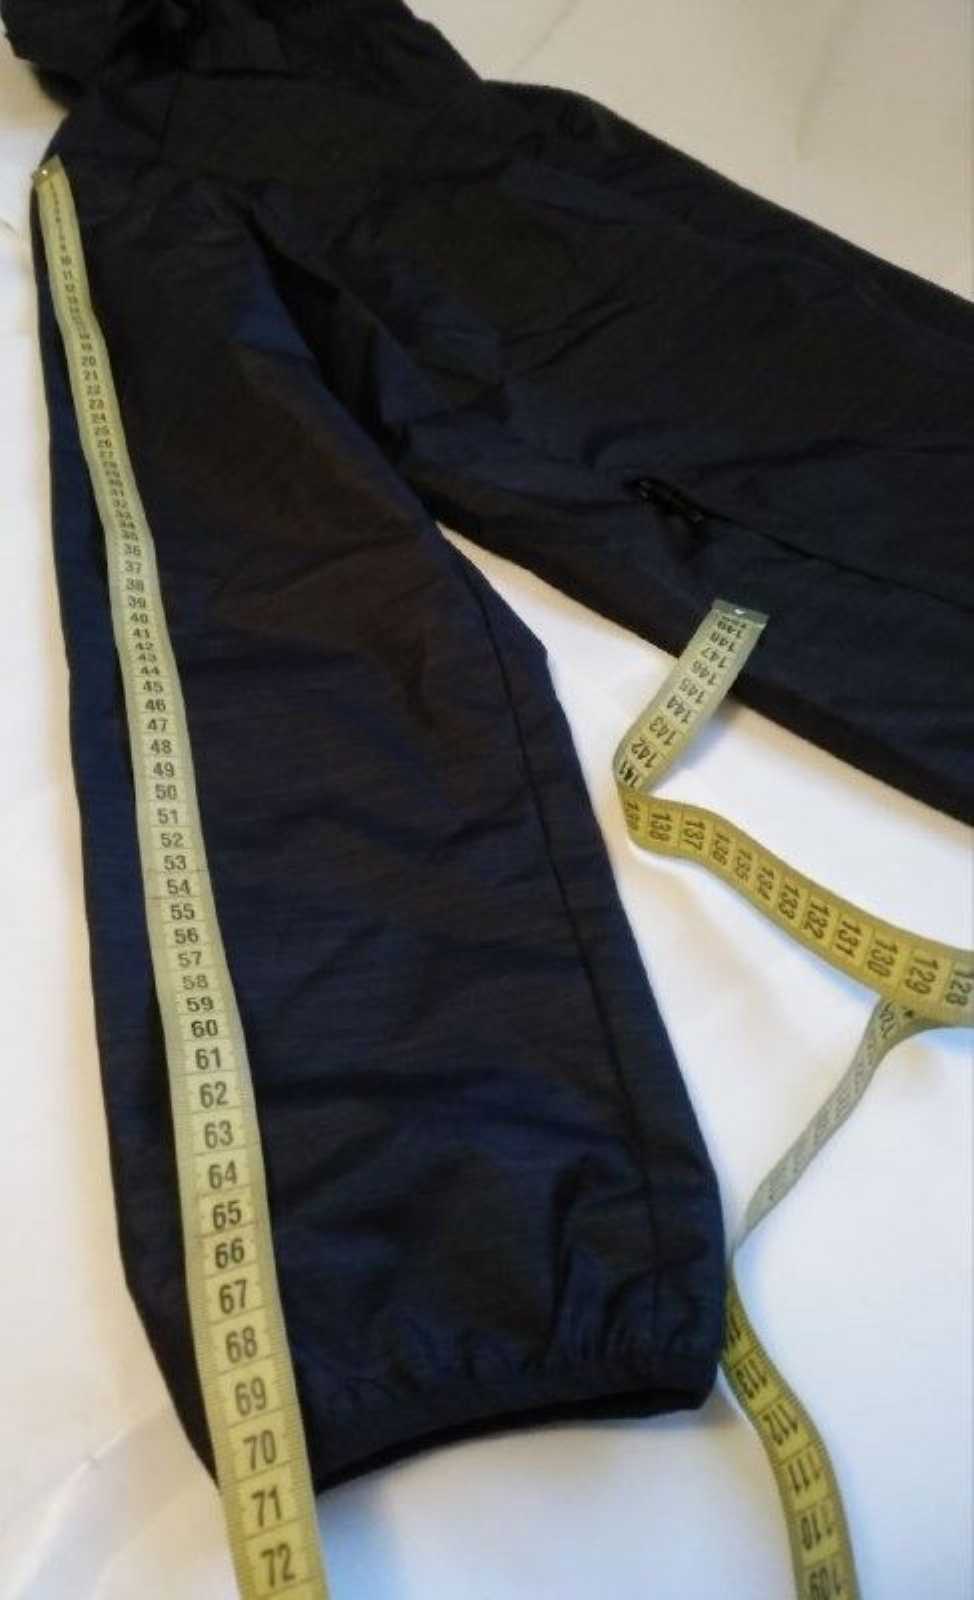 Компактный дождевик Decathlon jacket run rain black